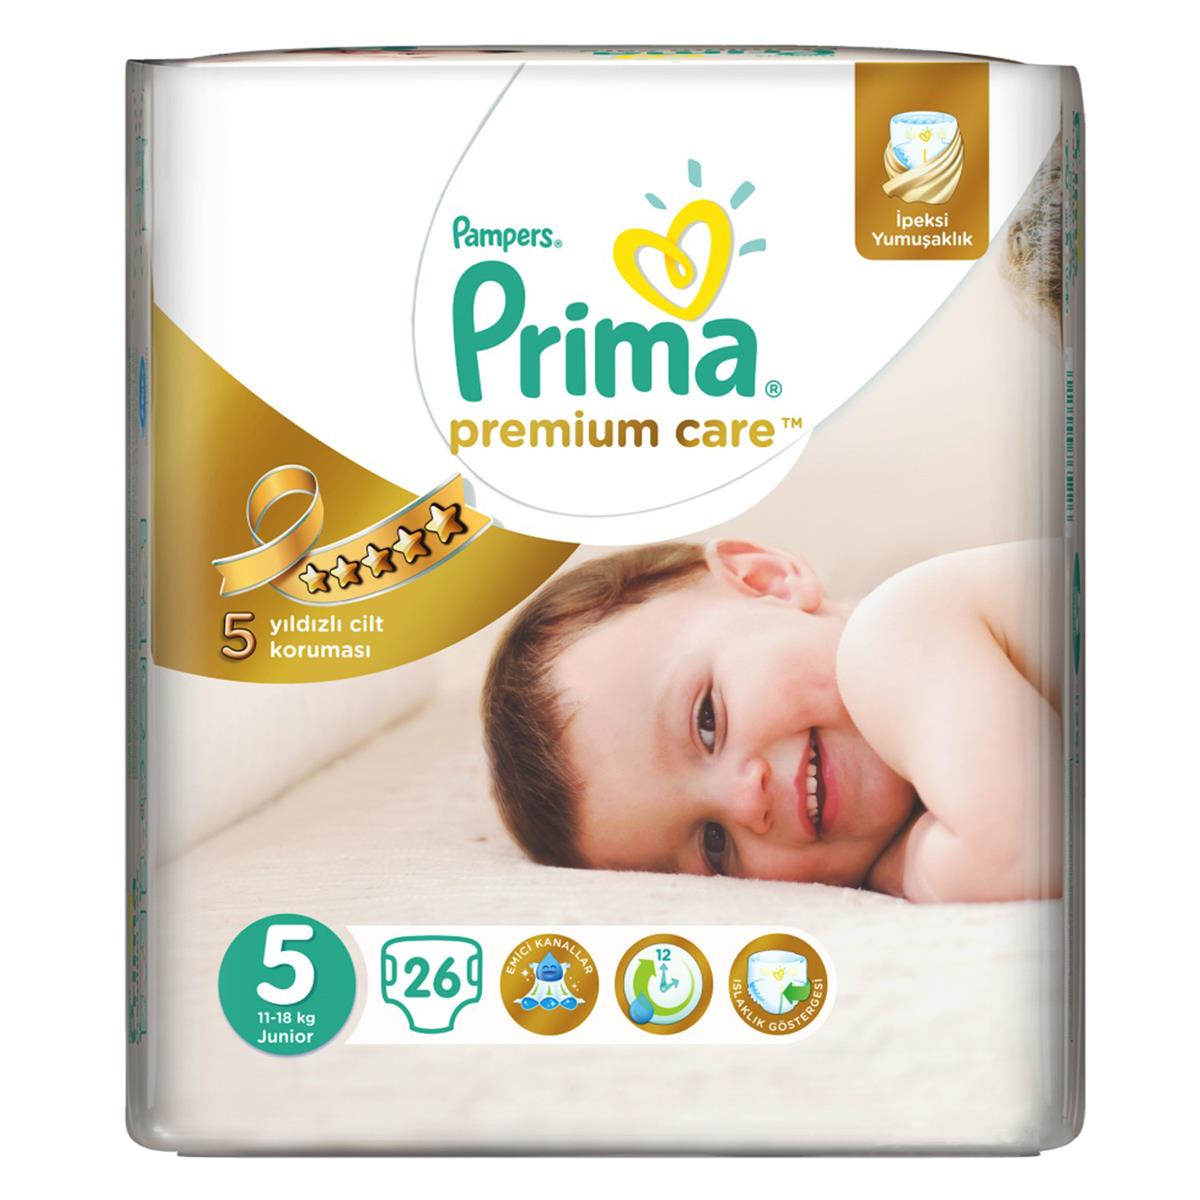 Prima Bebek Bezi Premium Care 5 Beden 11-18 kg Junior 26'lı